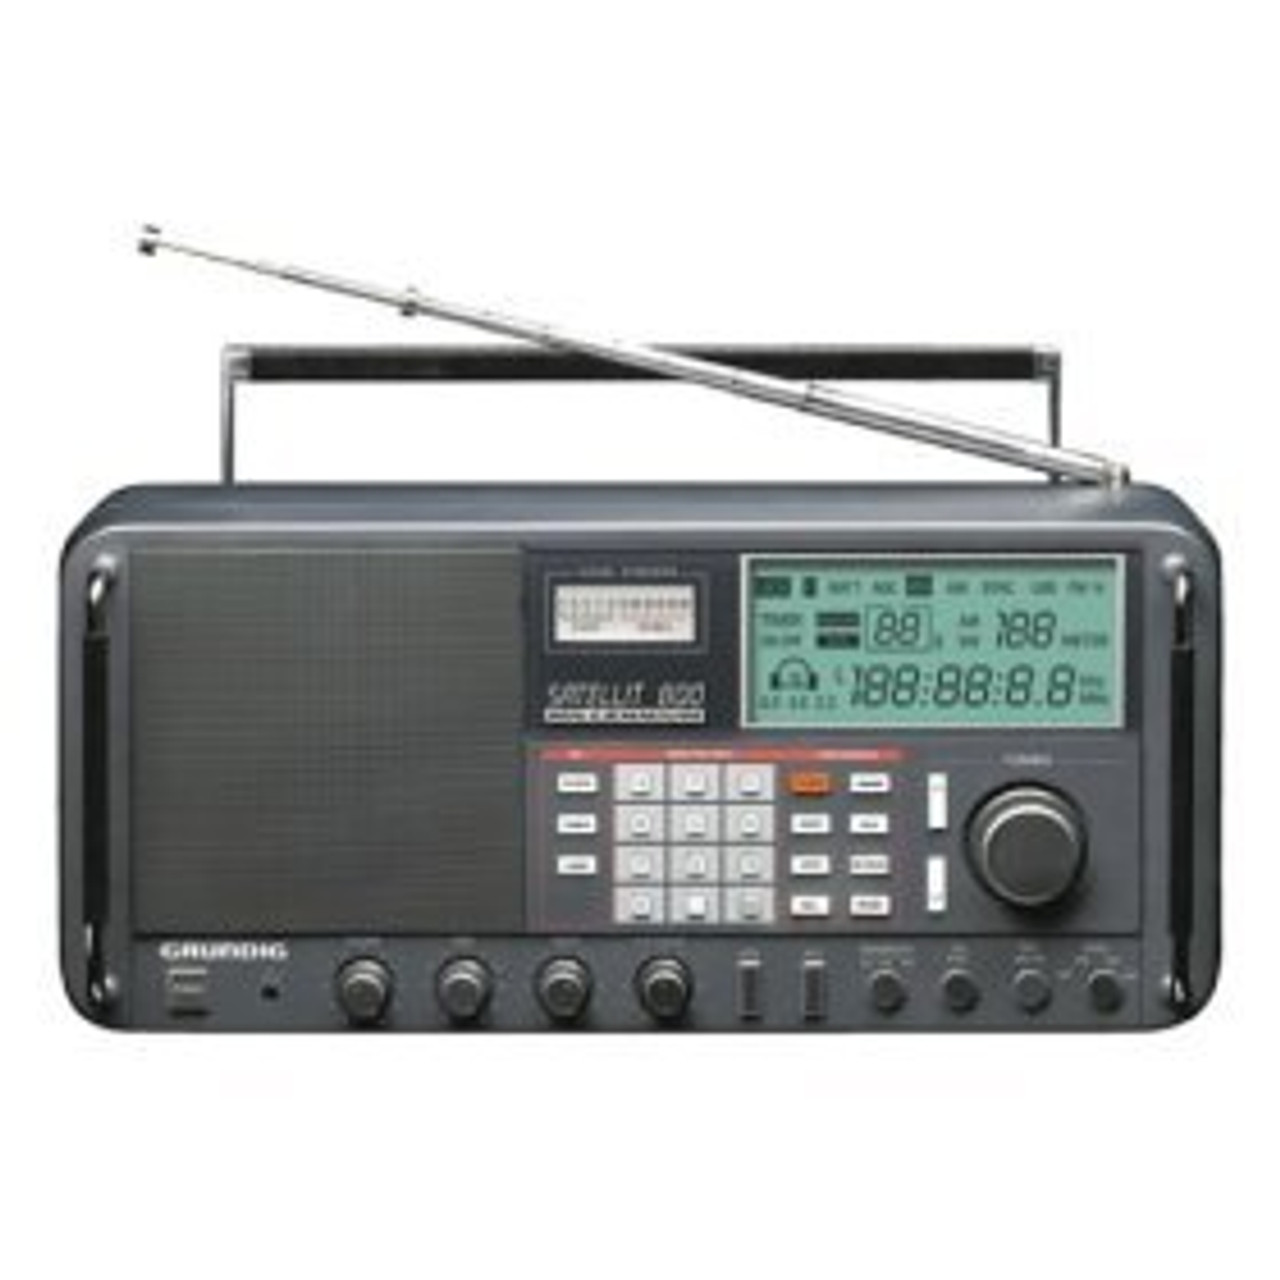 Grundig 800 Shortwave Radio